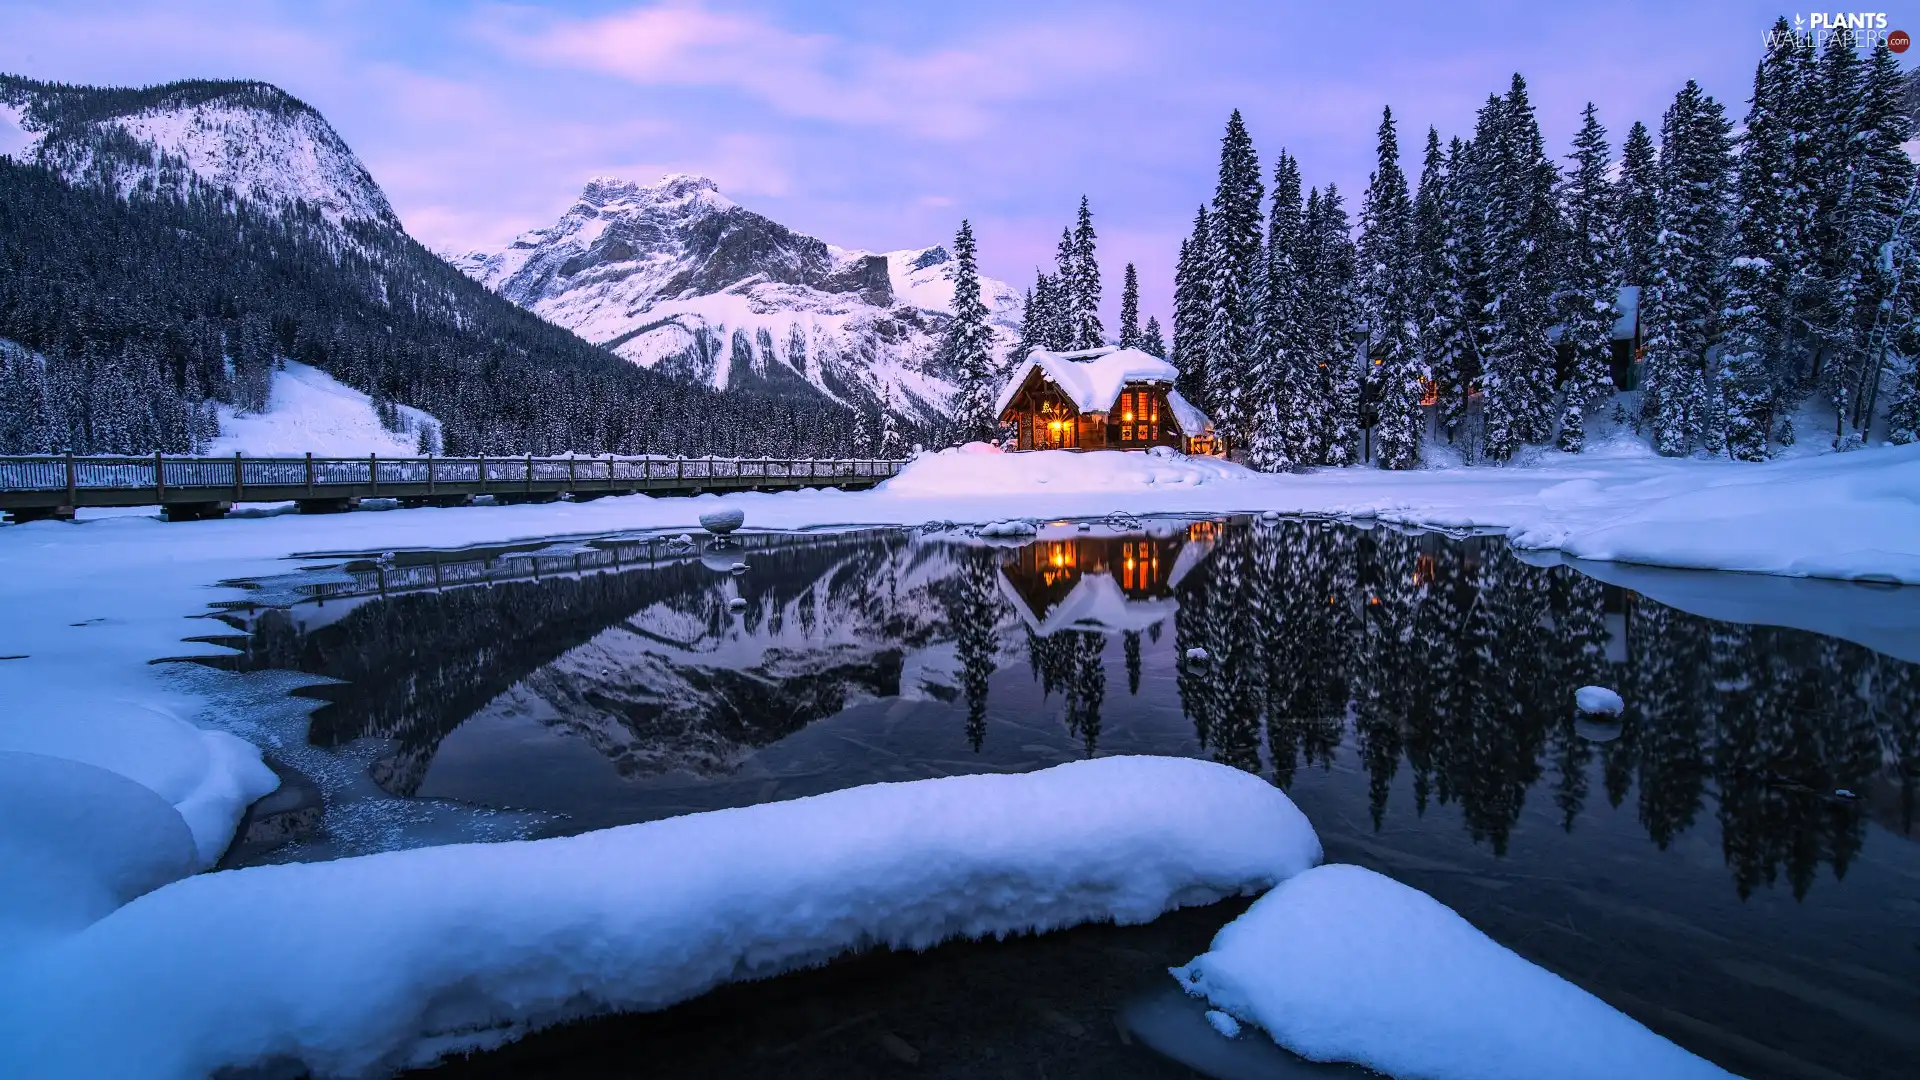 trees, Mountains, viewes, bridge, house, British Columbia, Emerald Lake, Yoho National Park, Canada, lake, Floodlit, winter